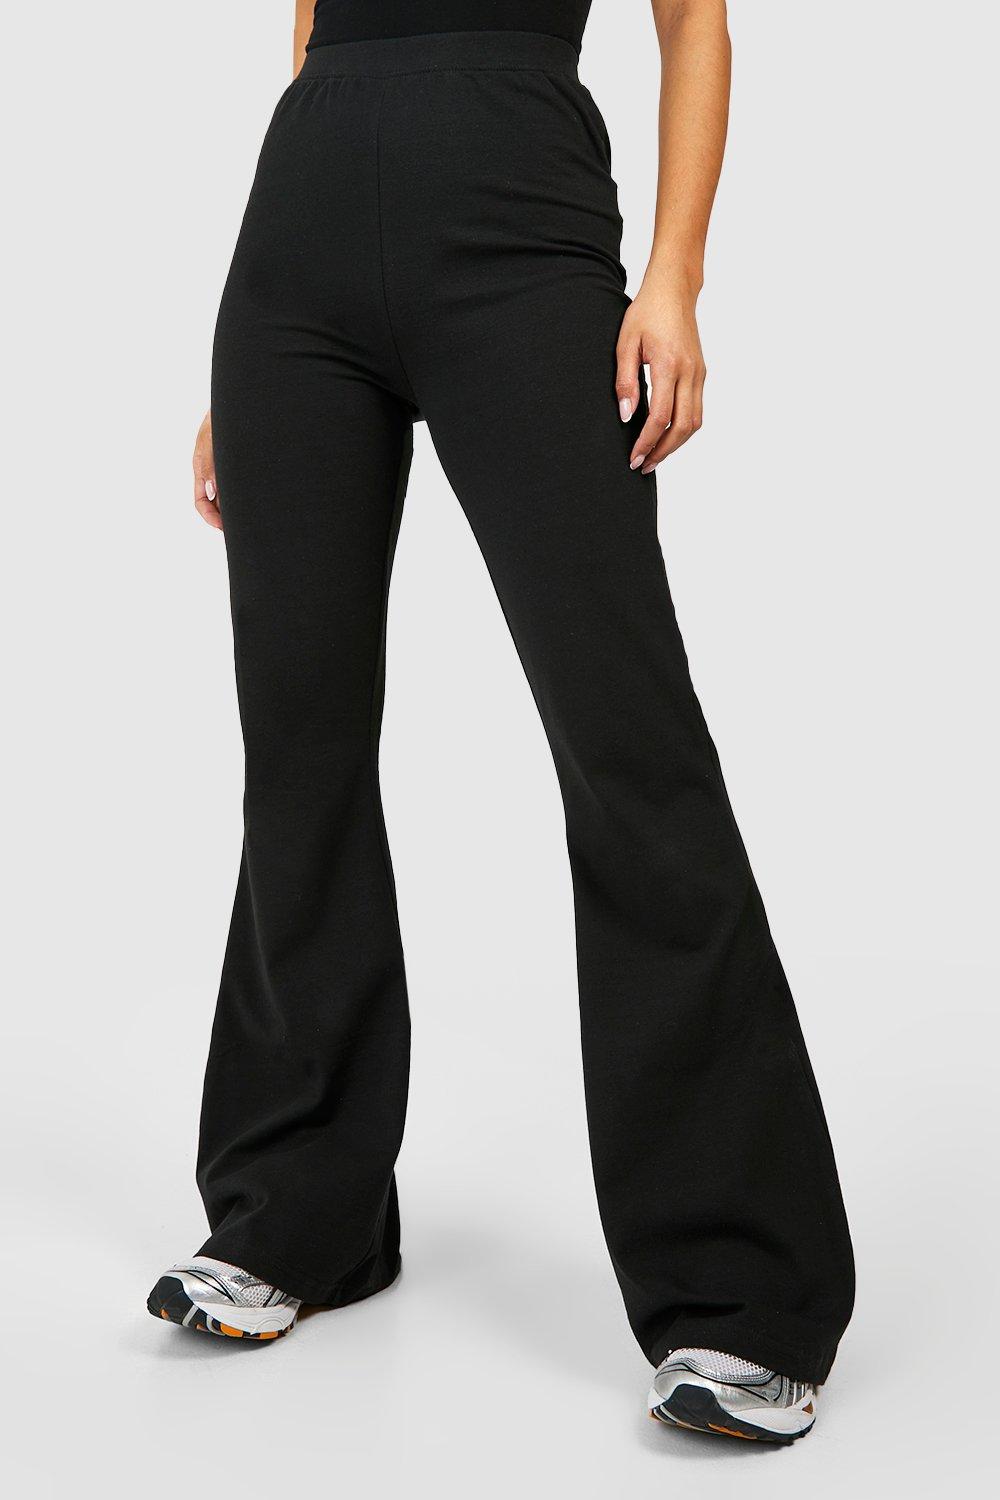 https://media.boohoo.com/i/boohoo/gzz48956_black_xl_3/female-black-cotton-black-high-waisted-flared-trousers